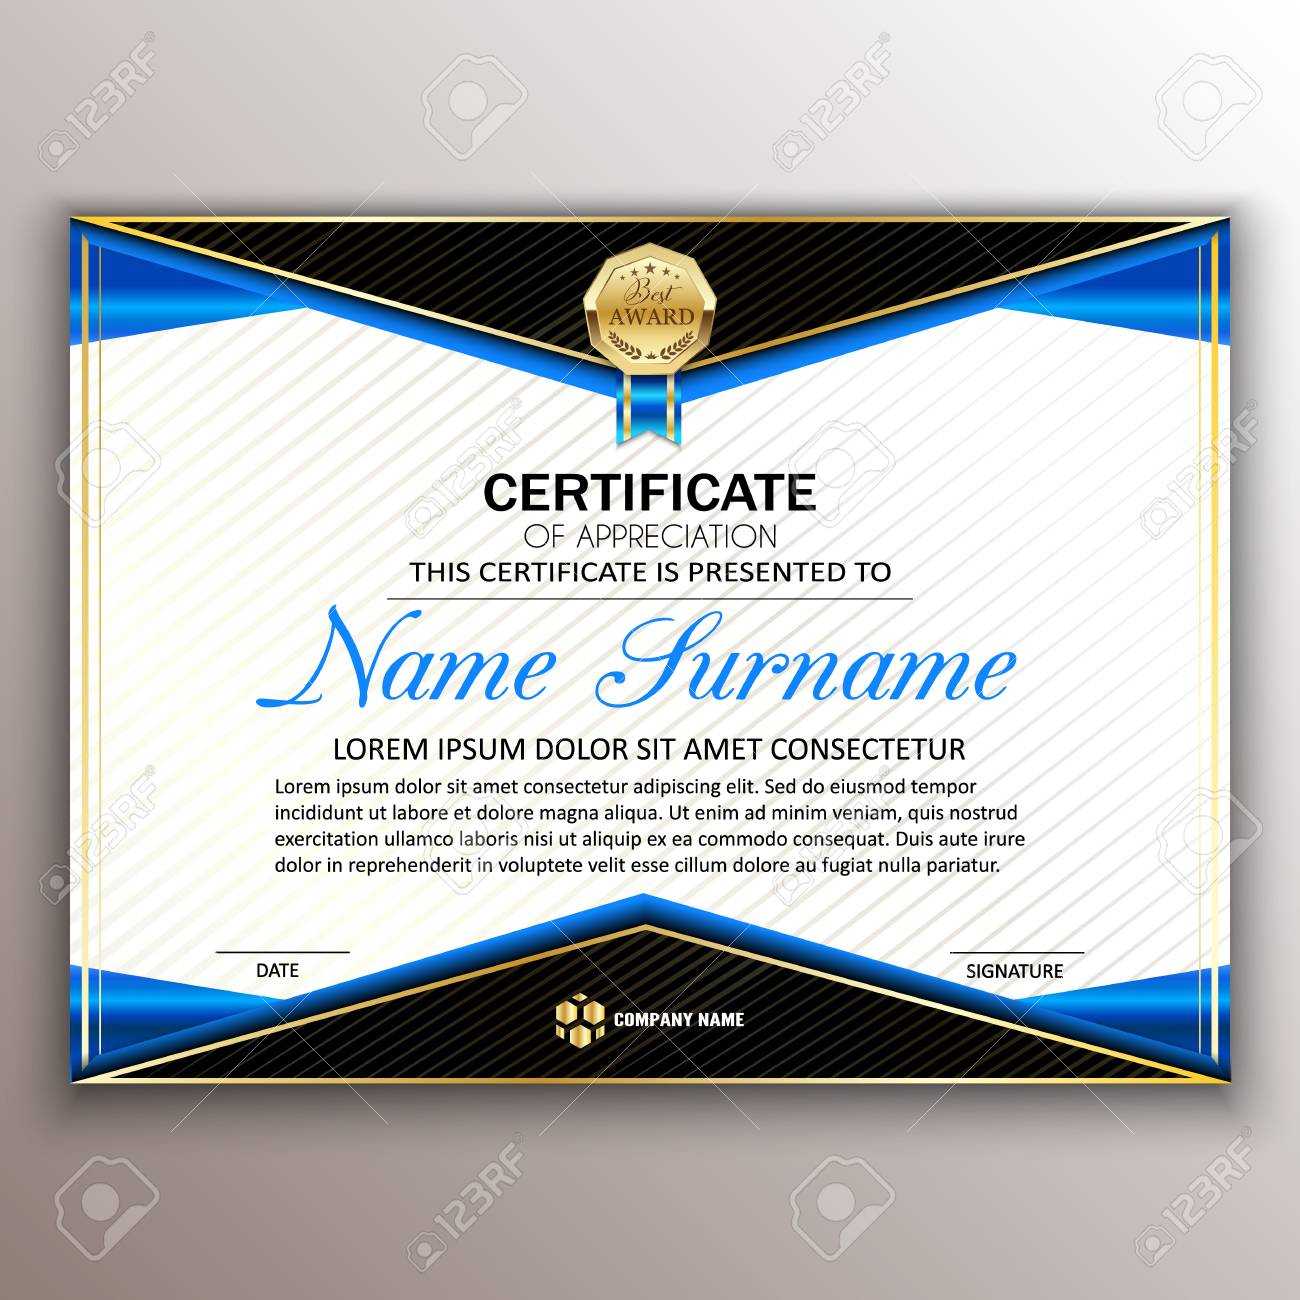 Beautiful Certificate Template Design With Best Award Symbol.. With Regard To Beautiful Certificate Templates